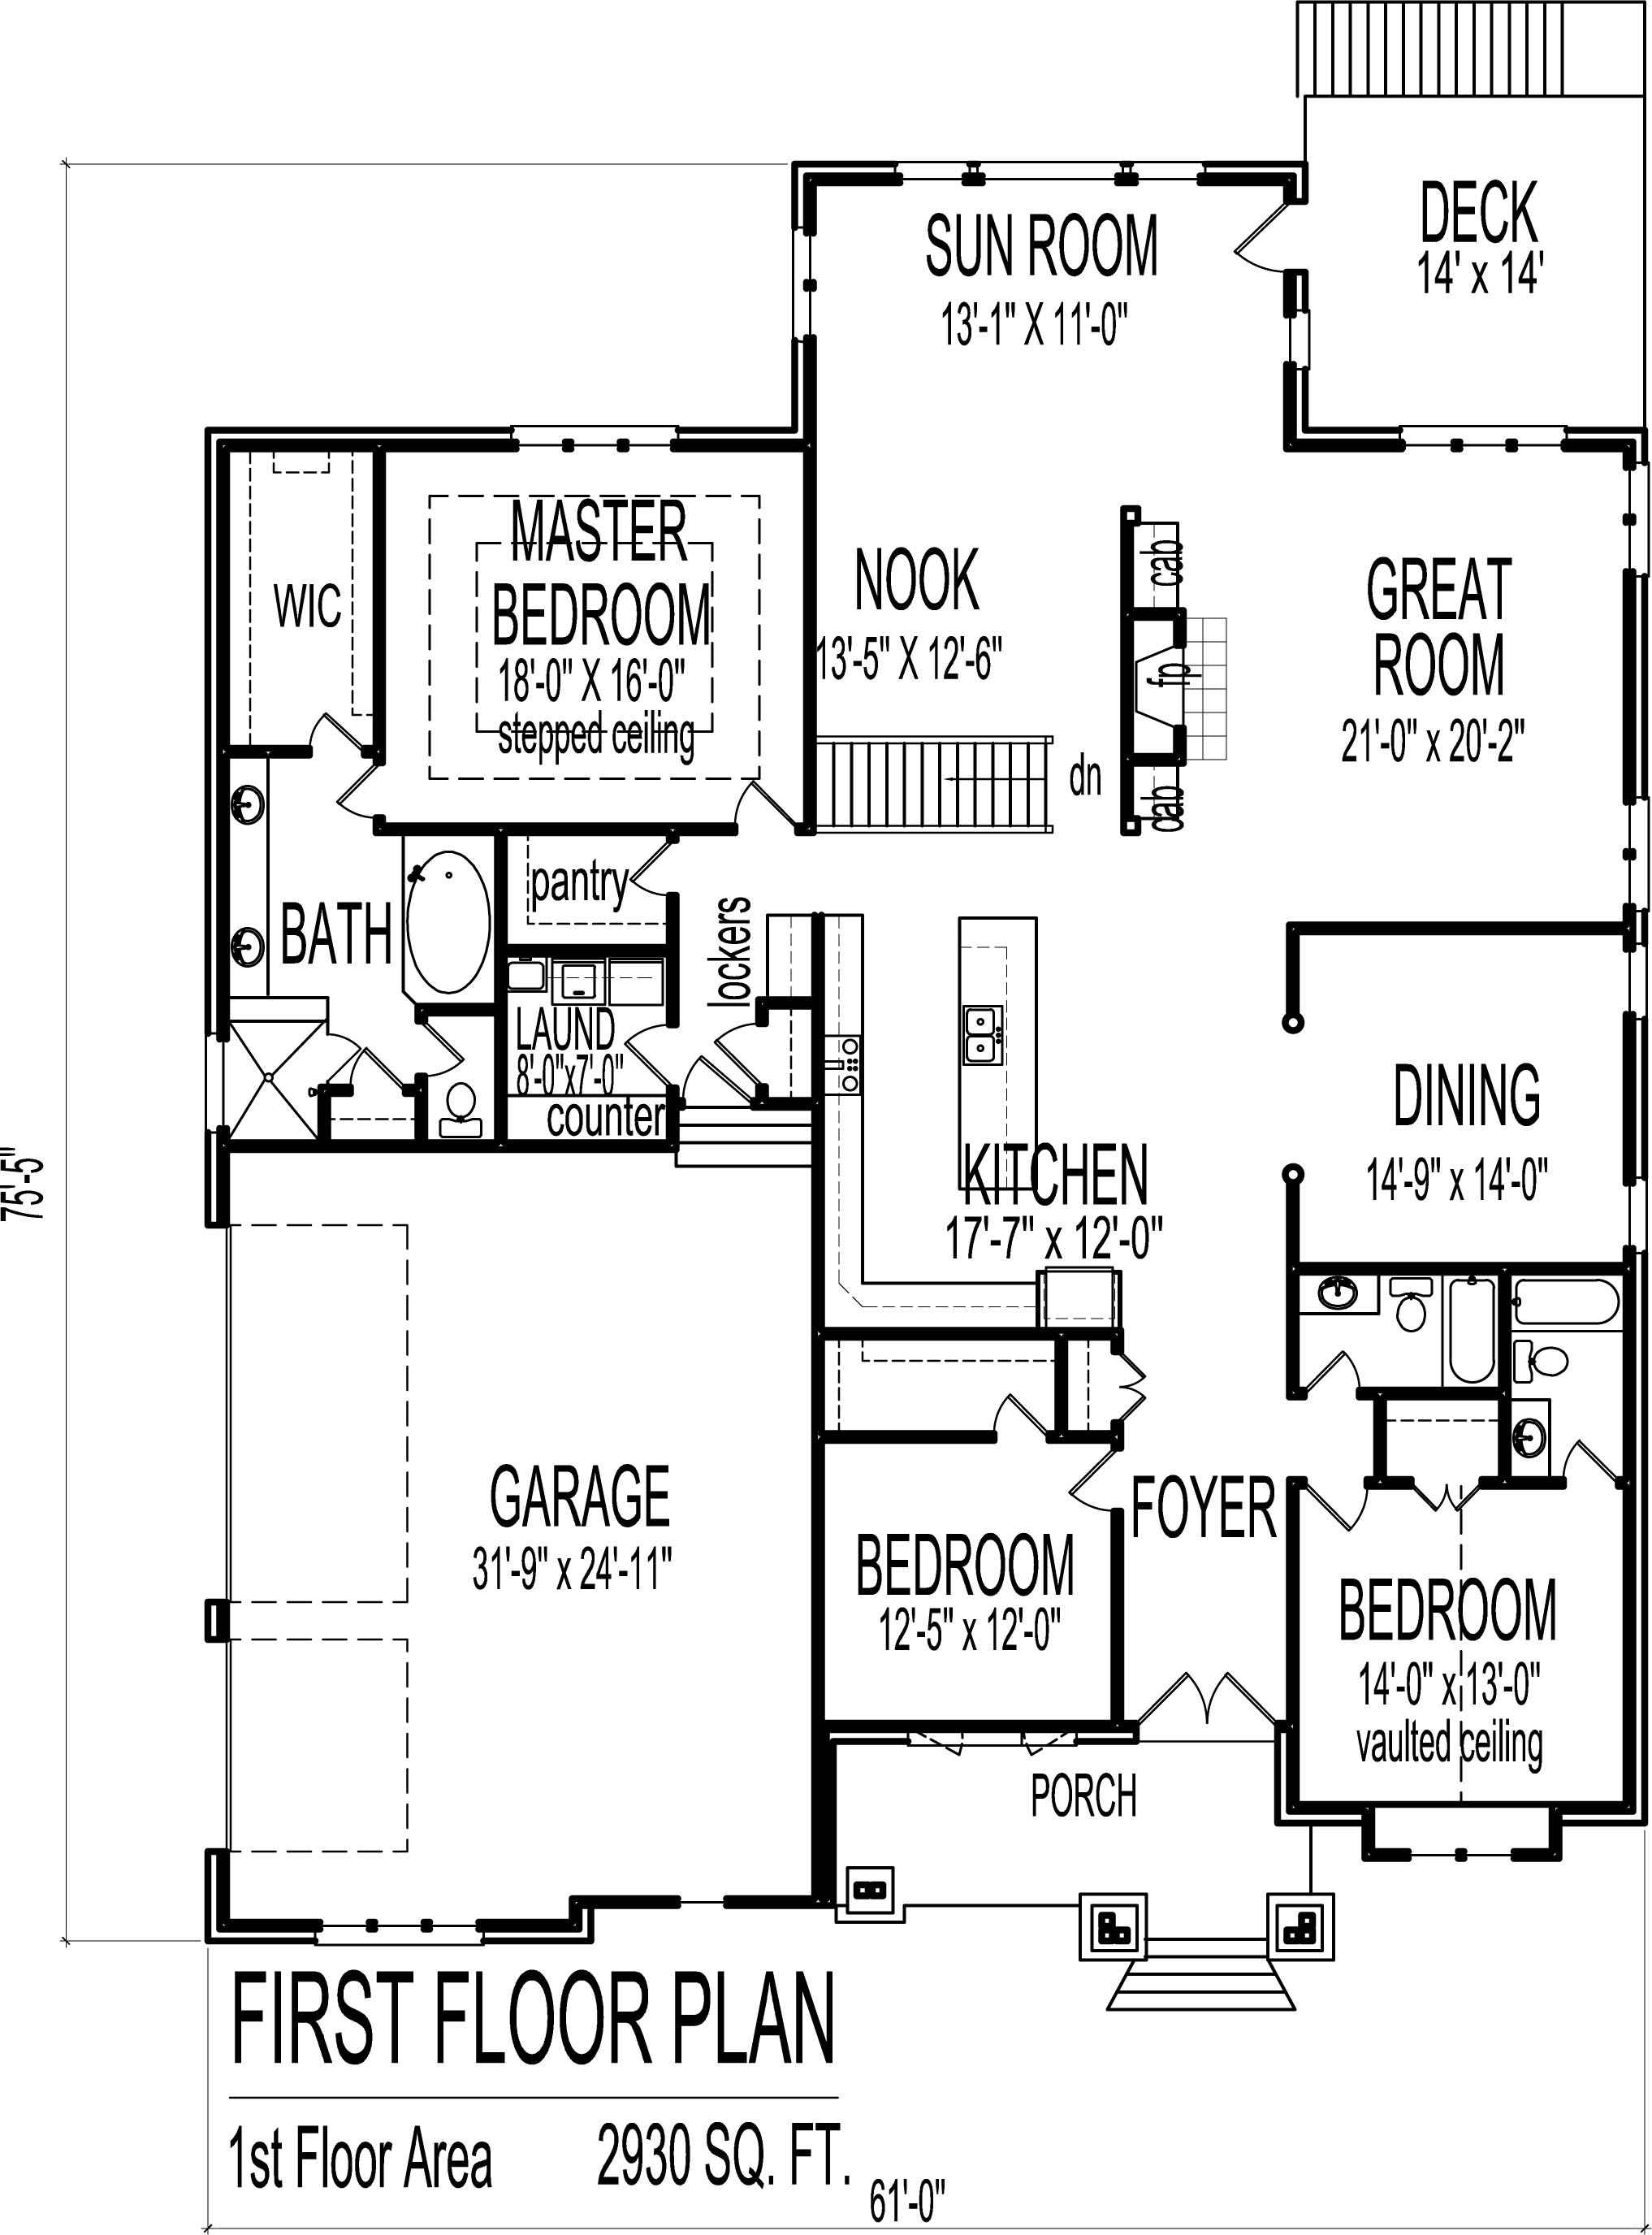 Simple Home Design Plans Home Design